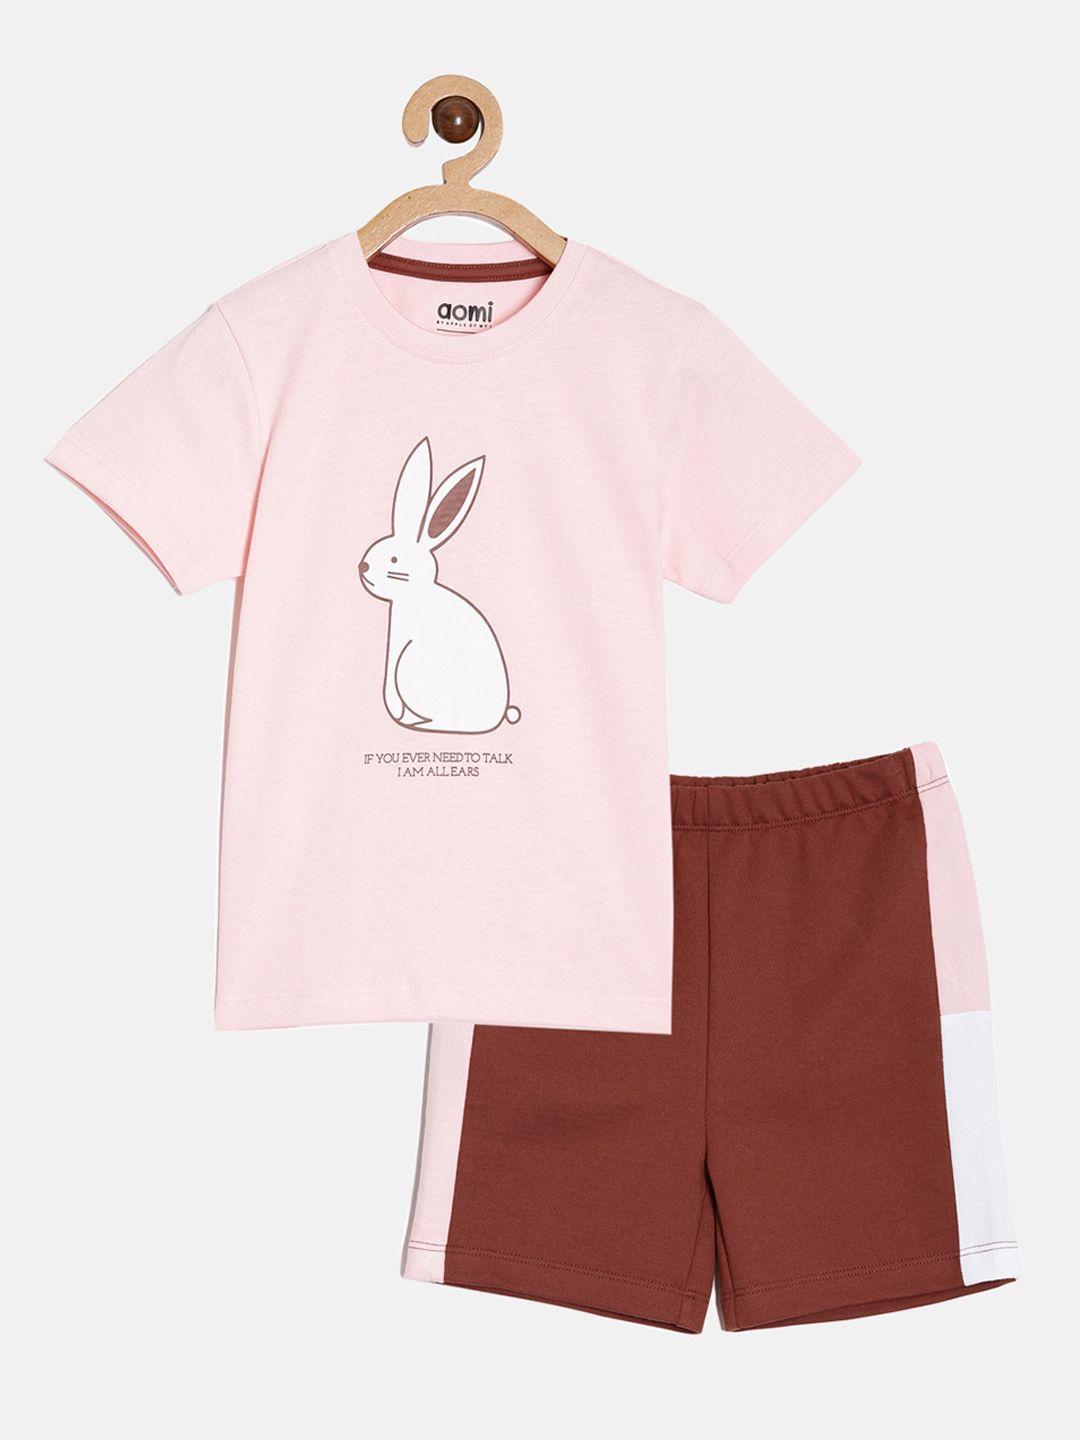 aomi-boys-pink-&-brown-printed-t-shirt-with-shorts